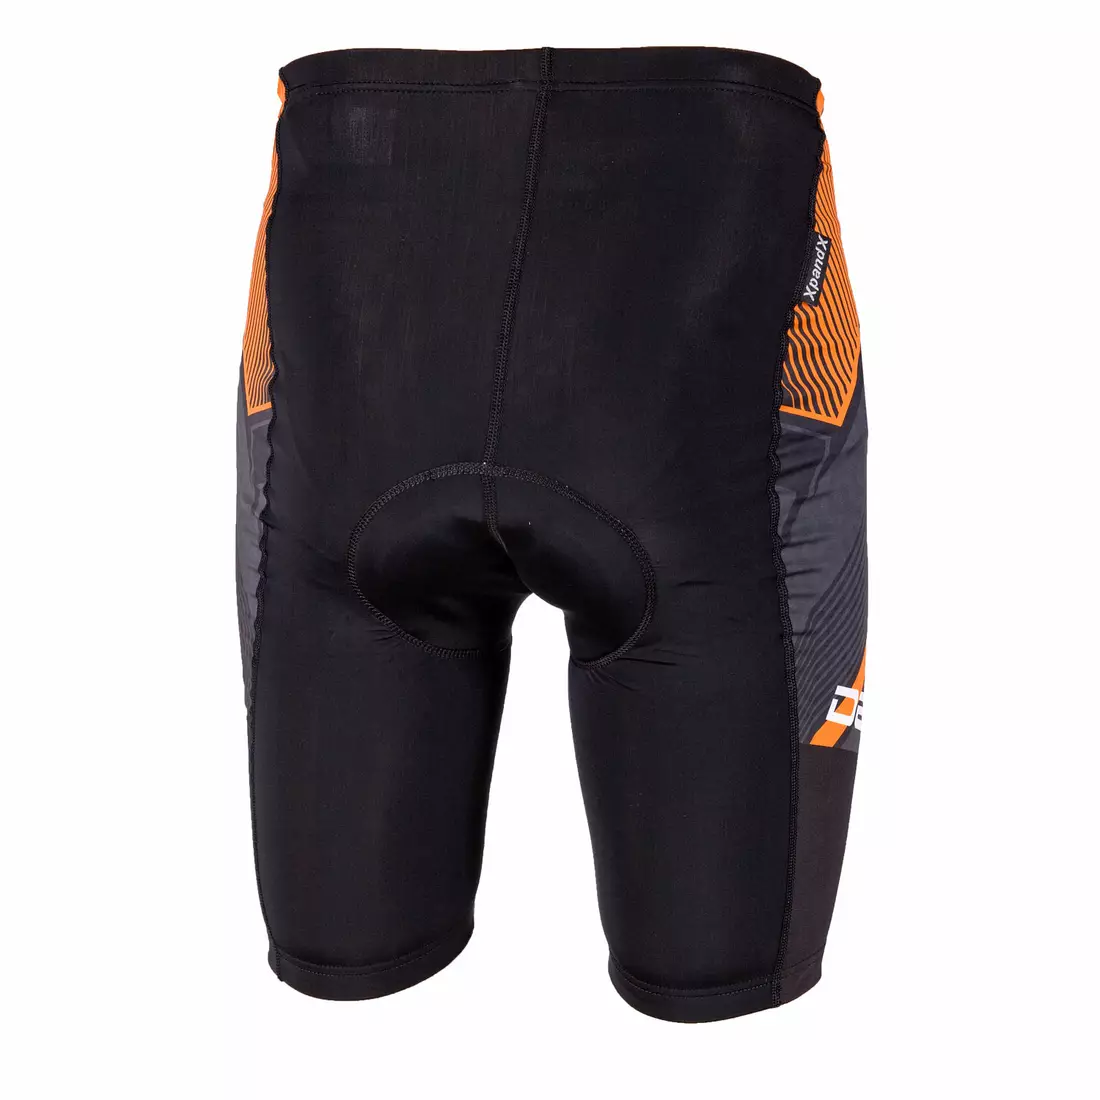 DEKO men's cycling shorts GEL orange DK-2020-005